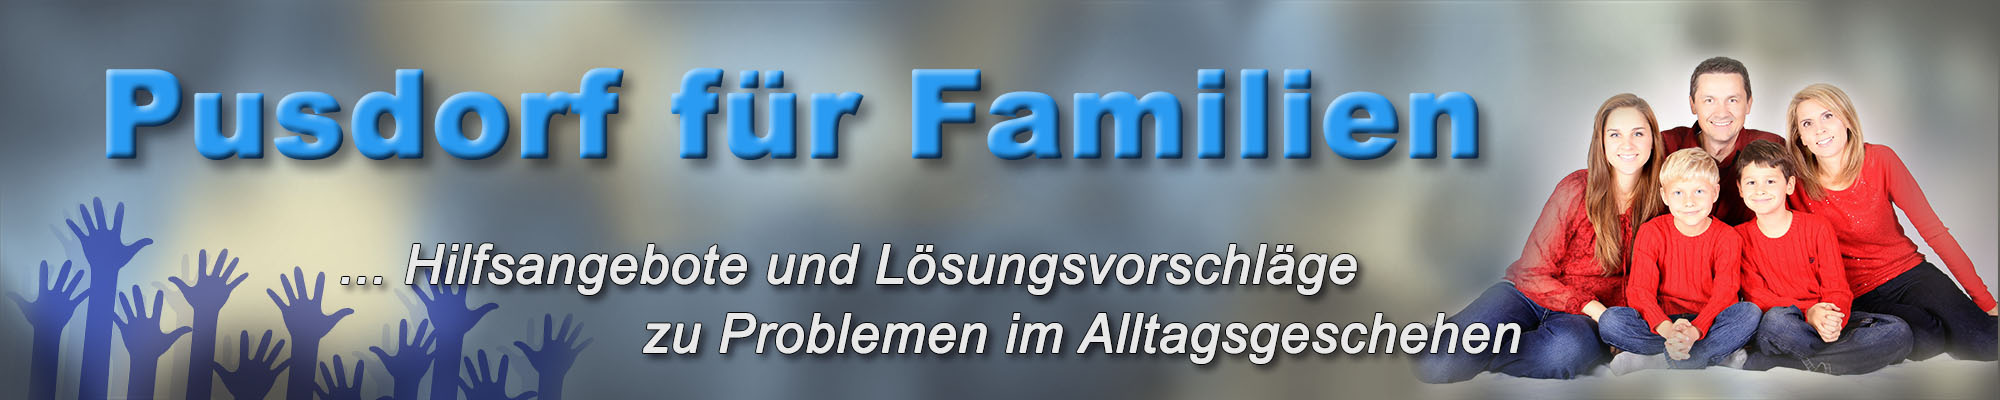 pusdorf.info – Infos, Hilfe & Beratung für Familien